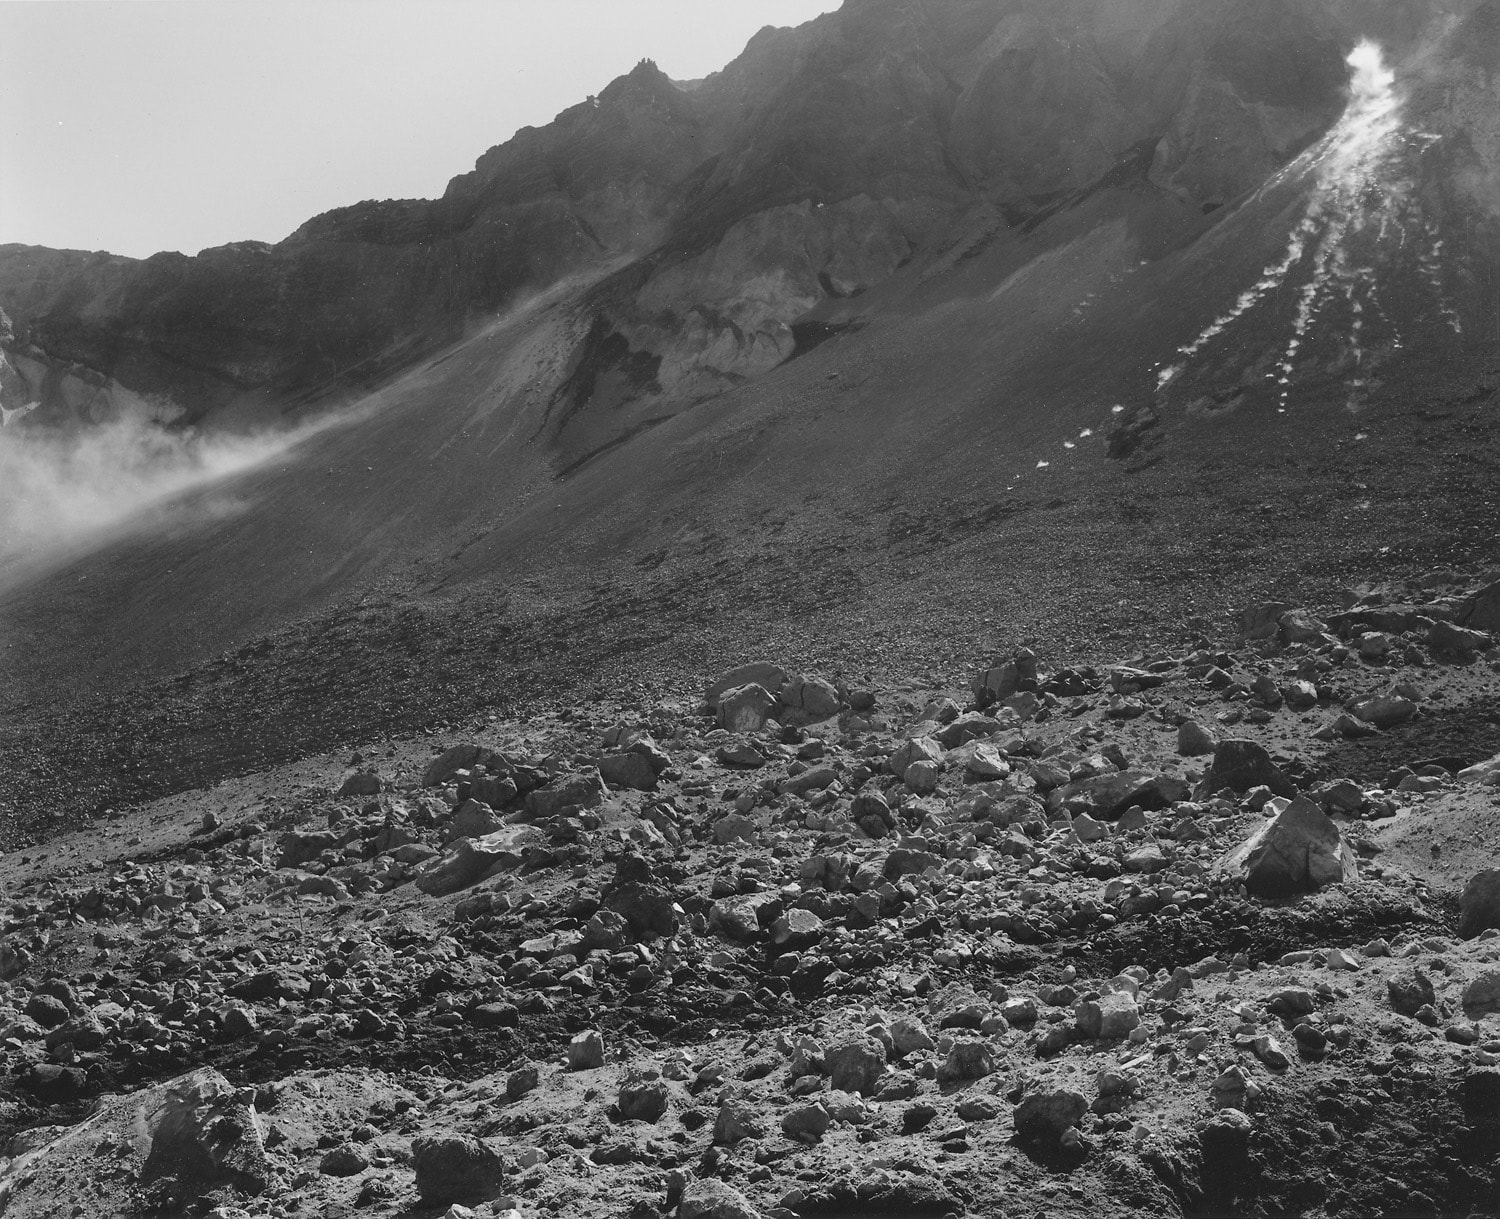 Frank Gohlke, Mount Saint Helens